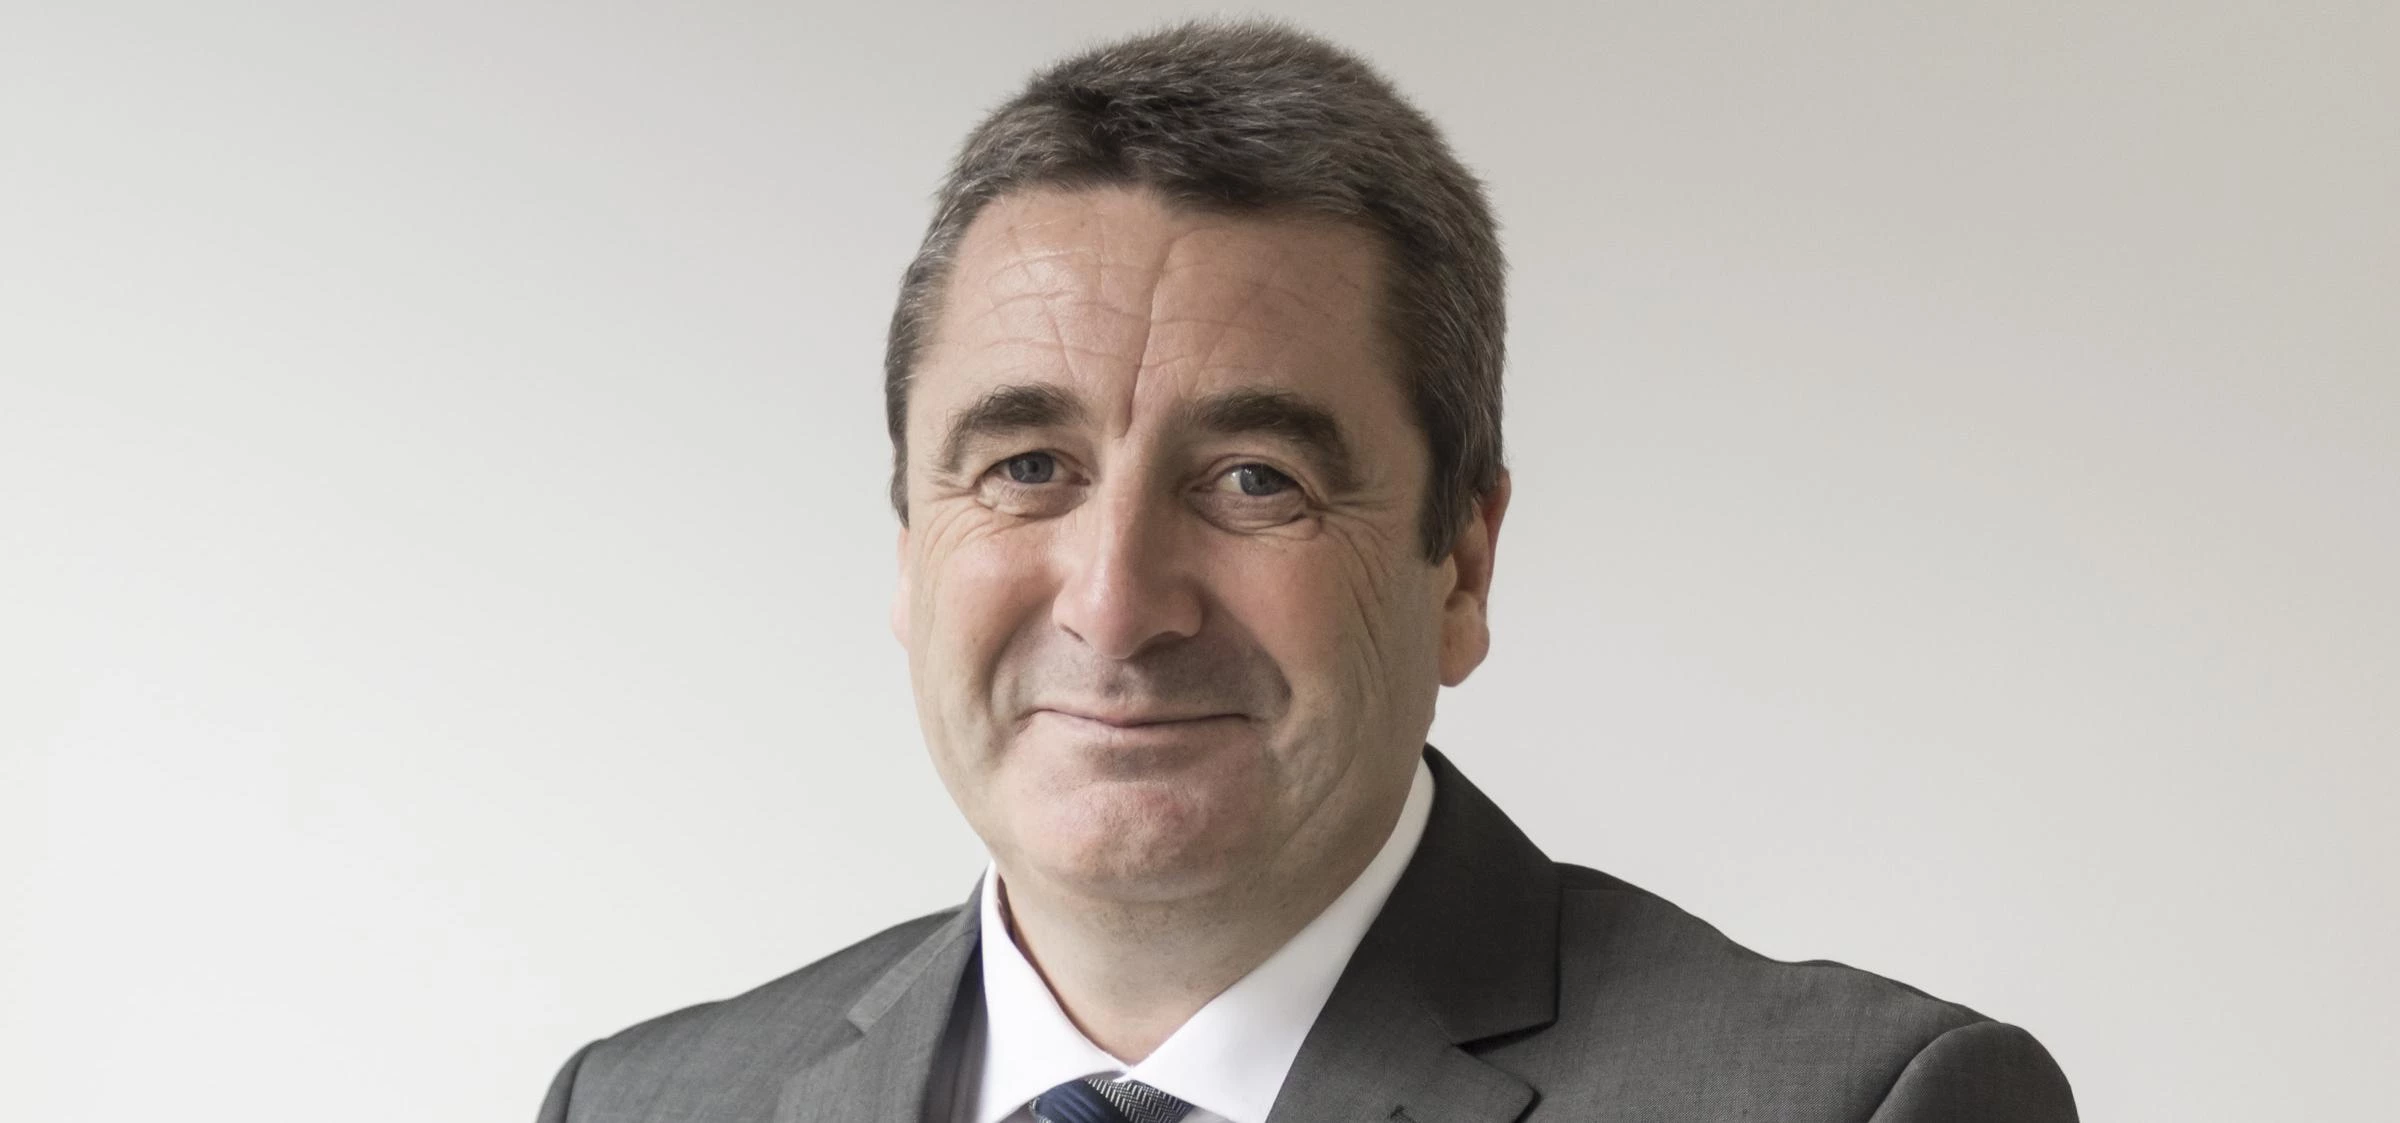 John Bevan, Managing Director at Secure Trust Bank Commercial Finance